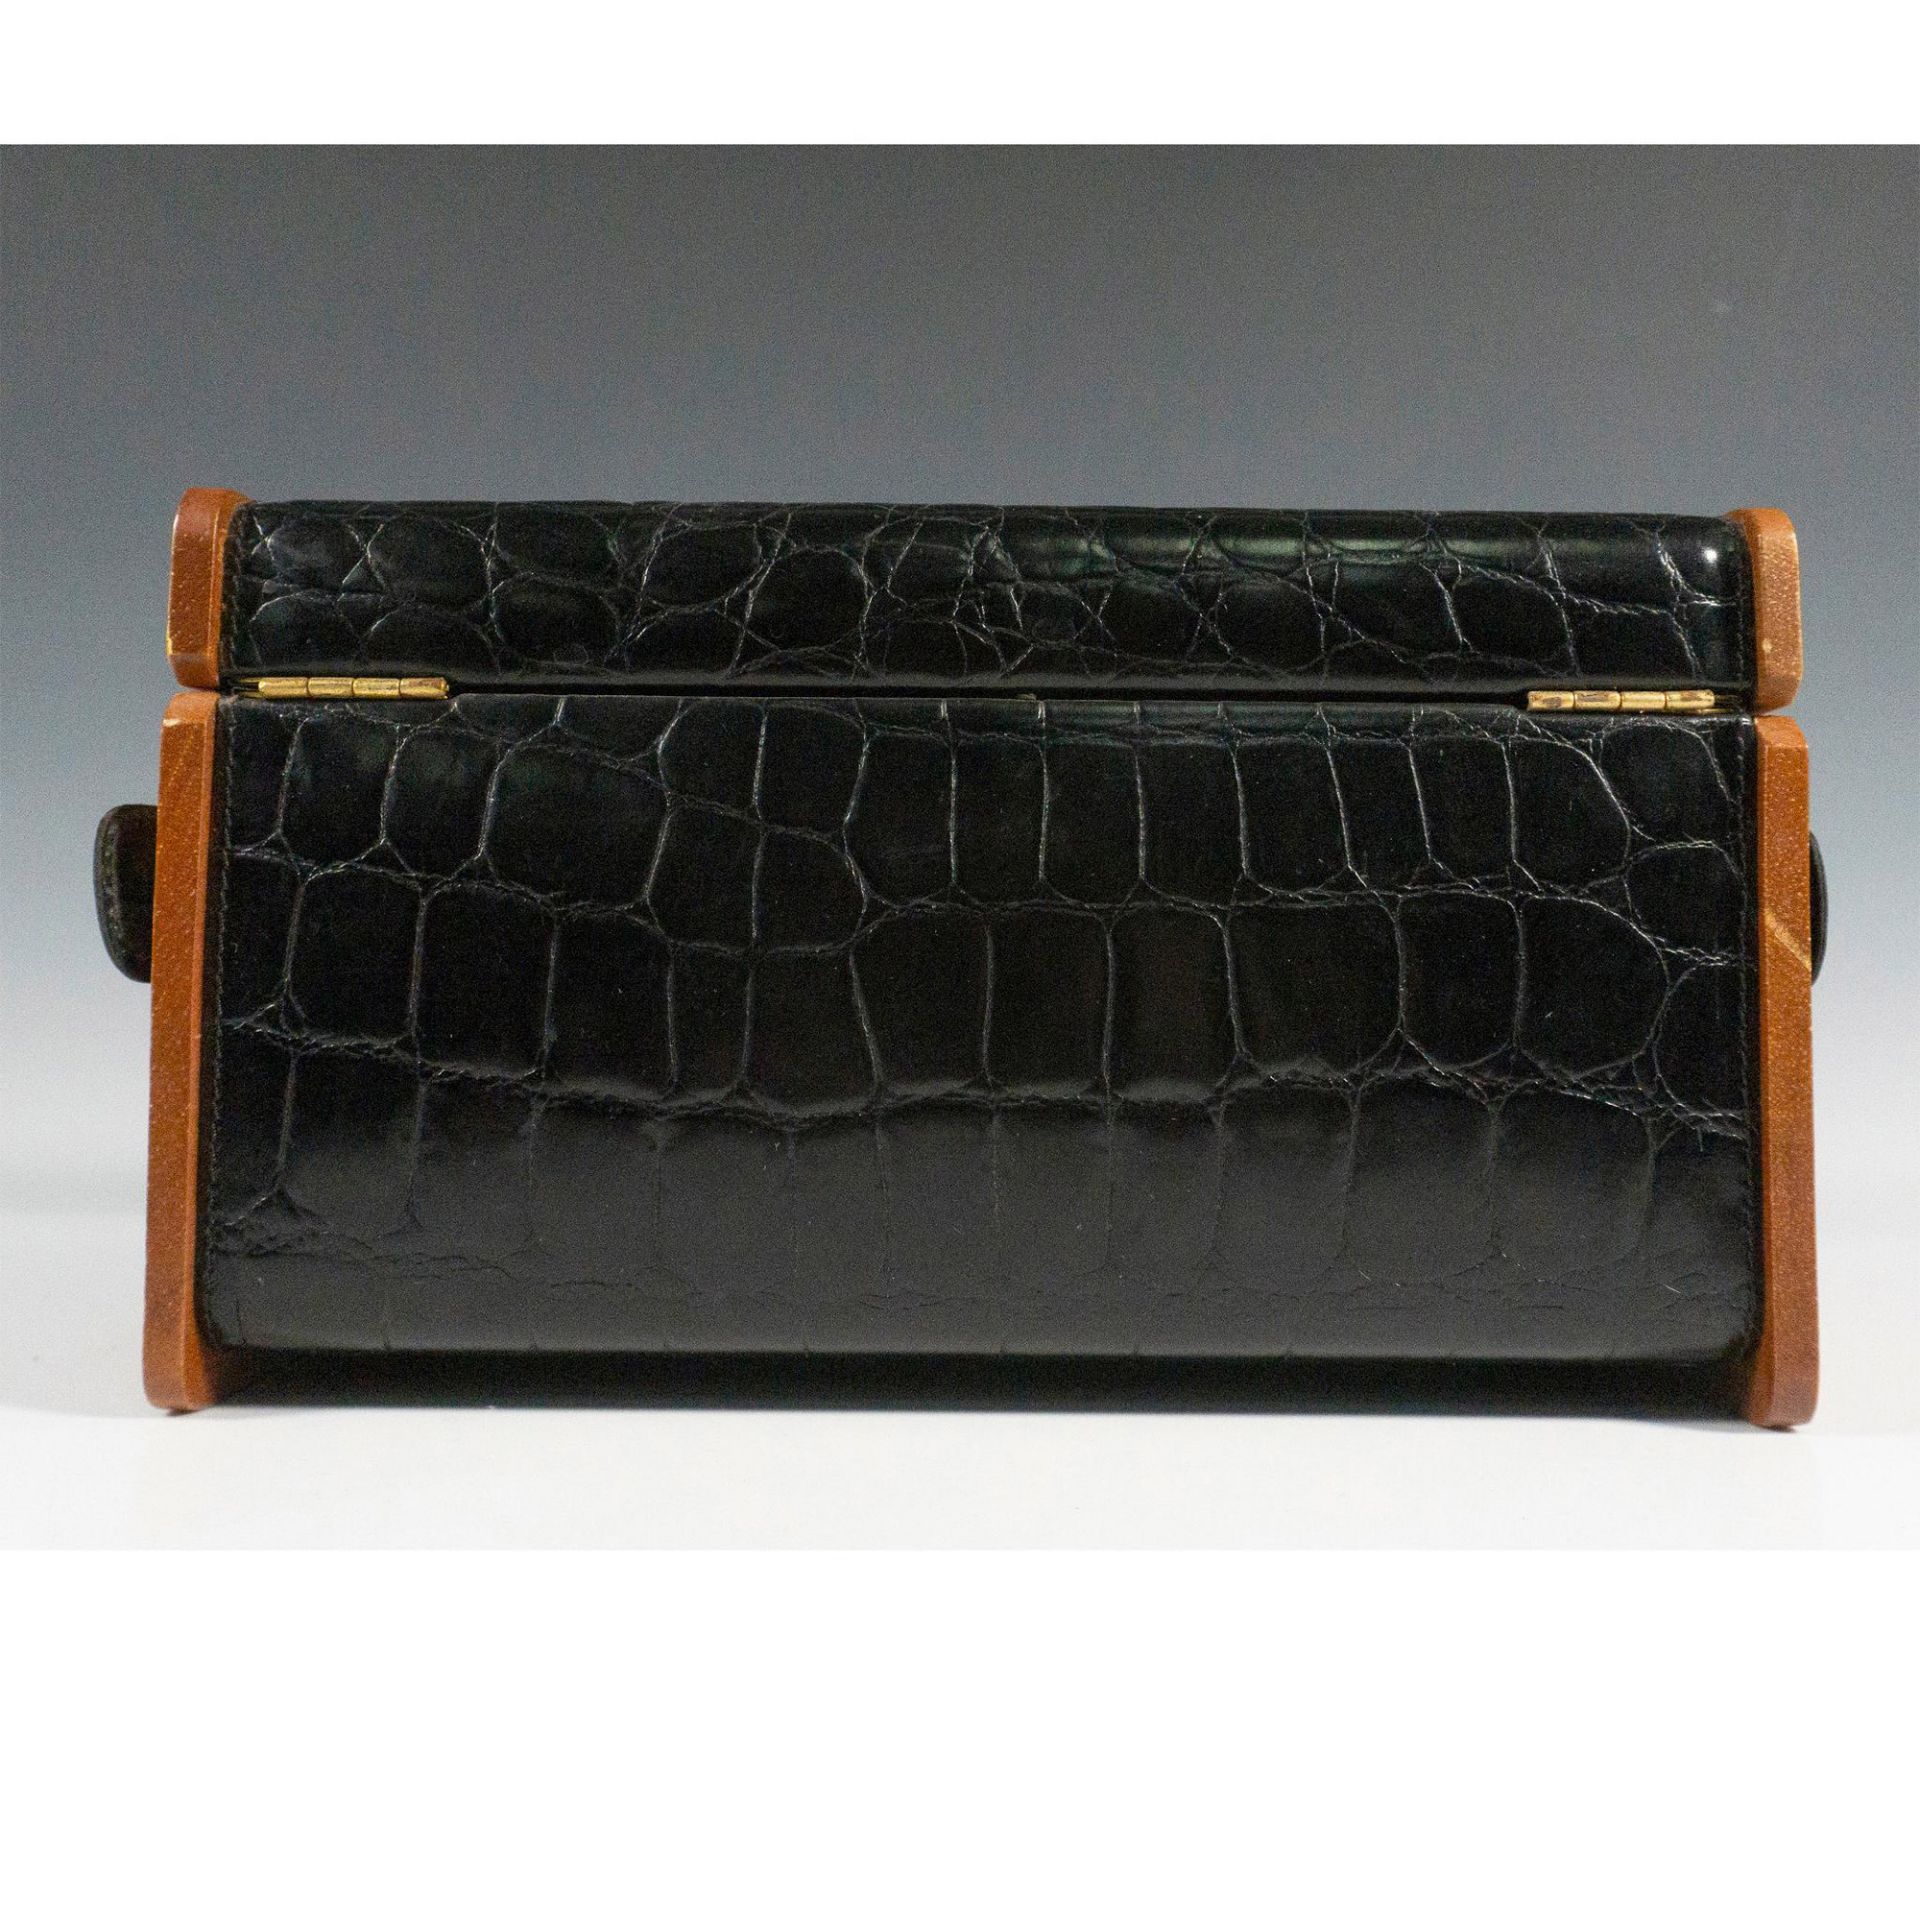 Spanish Black Leather and Wood Cigar Humidor Box - Image 4 of 6